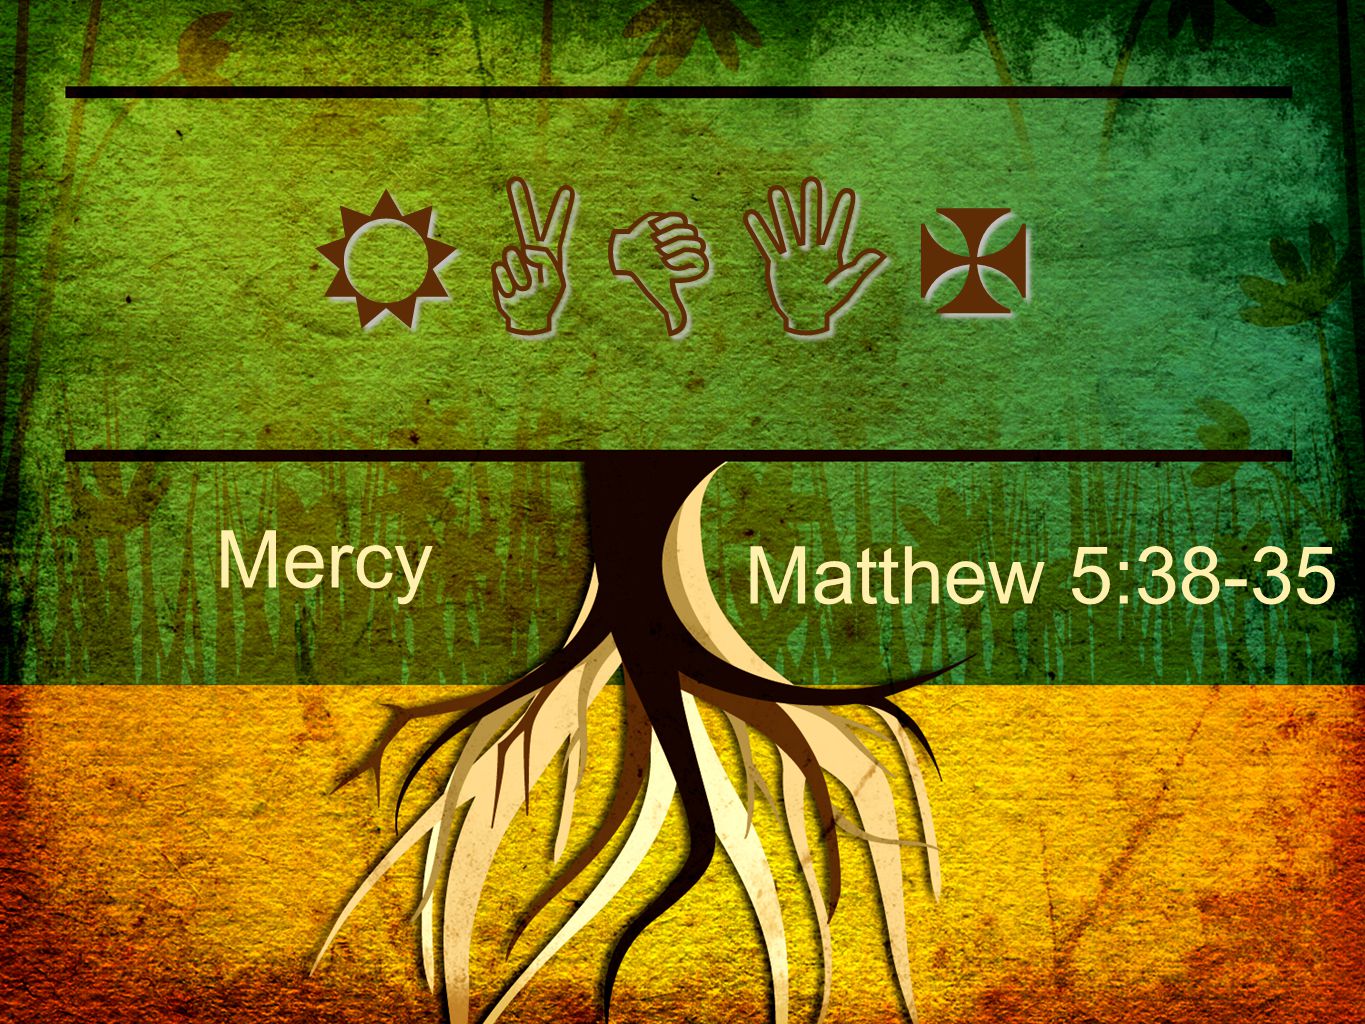 RADIX Mercy Matthew 5:38-35